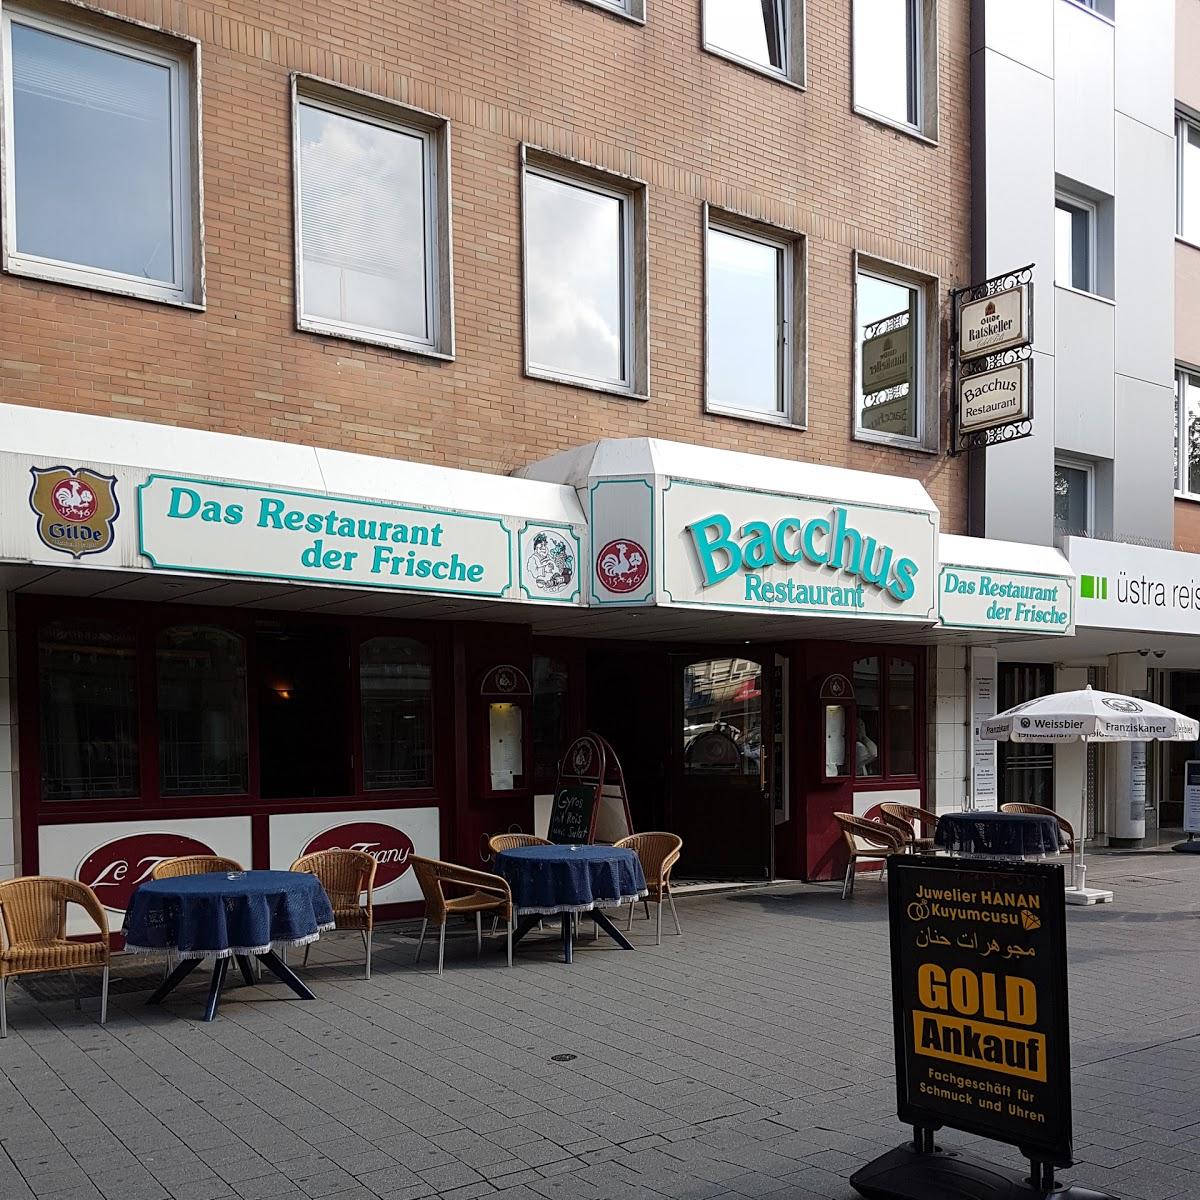 Restaurant "Restaurant Bacchus" in Hannover